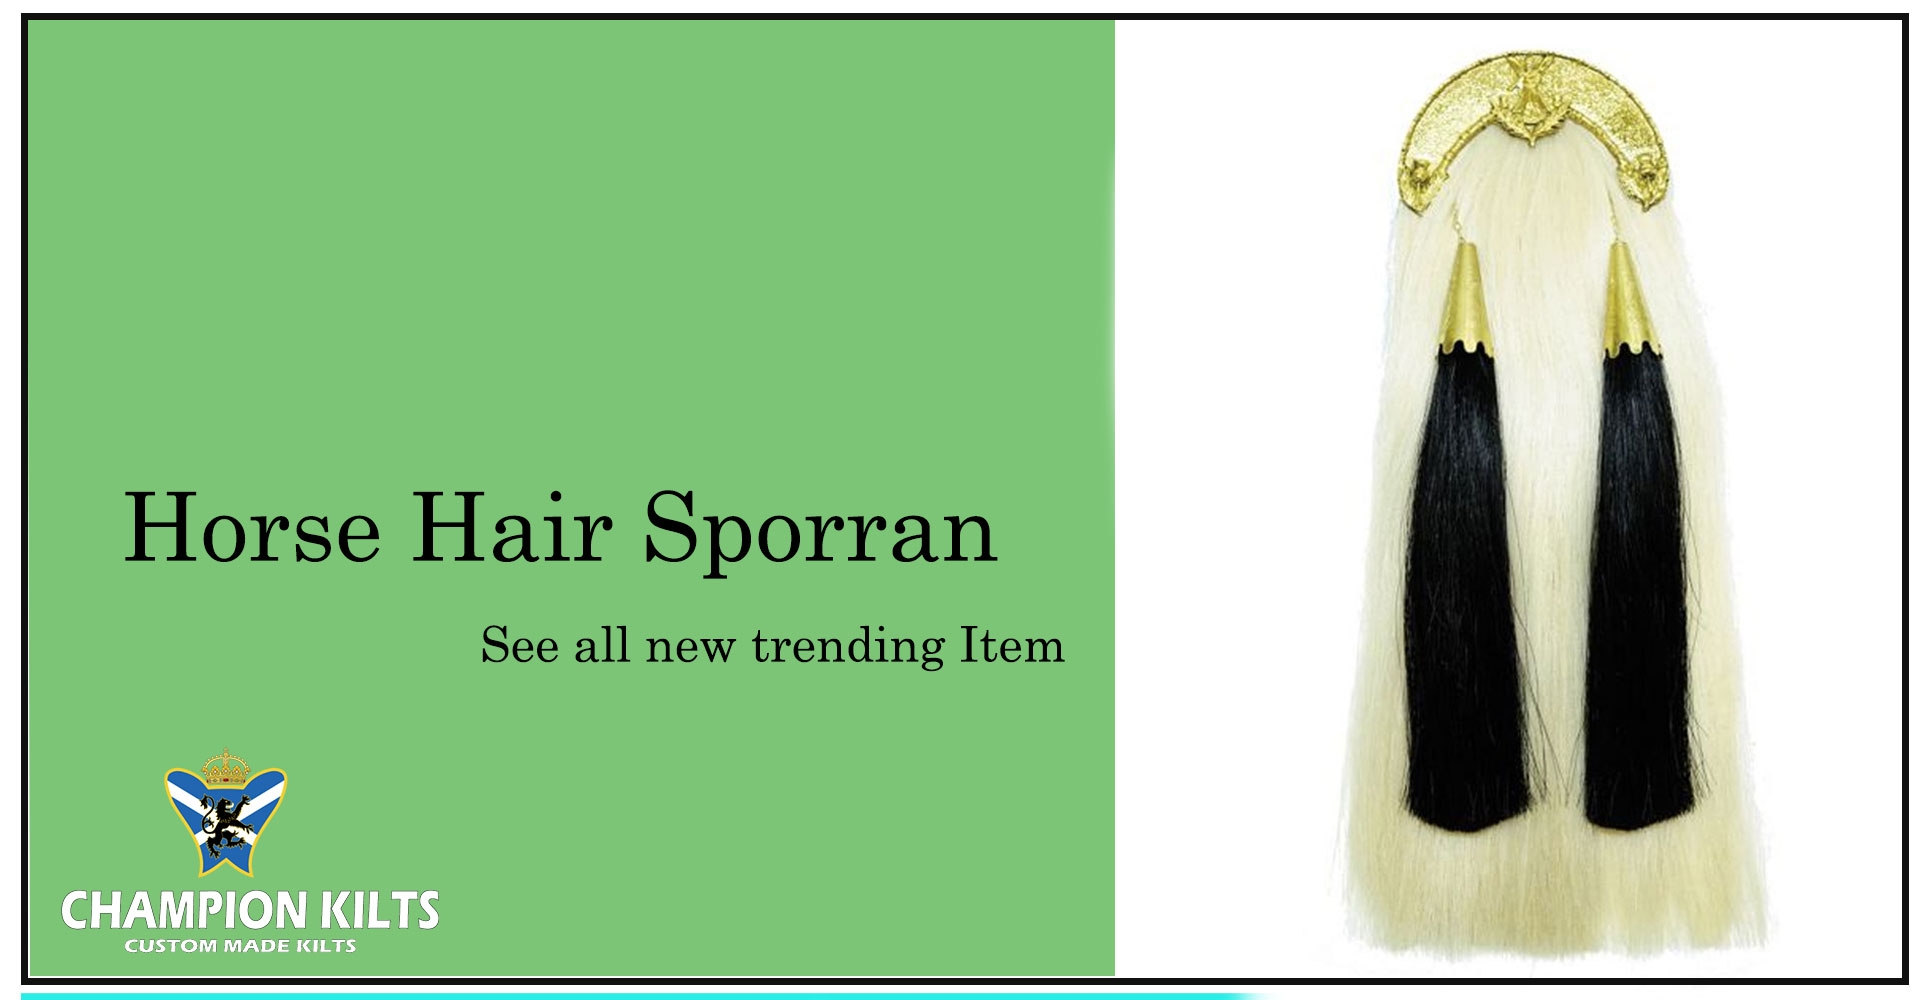 Horse Hair Sporrans